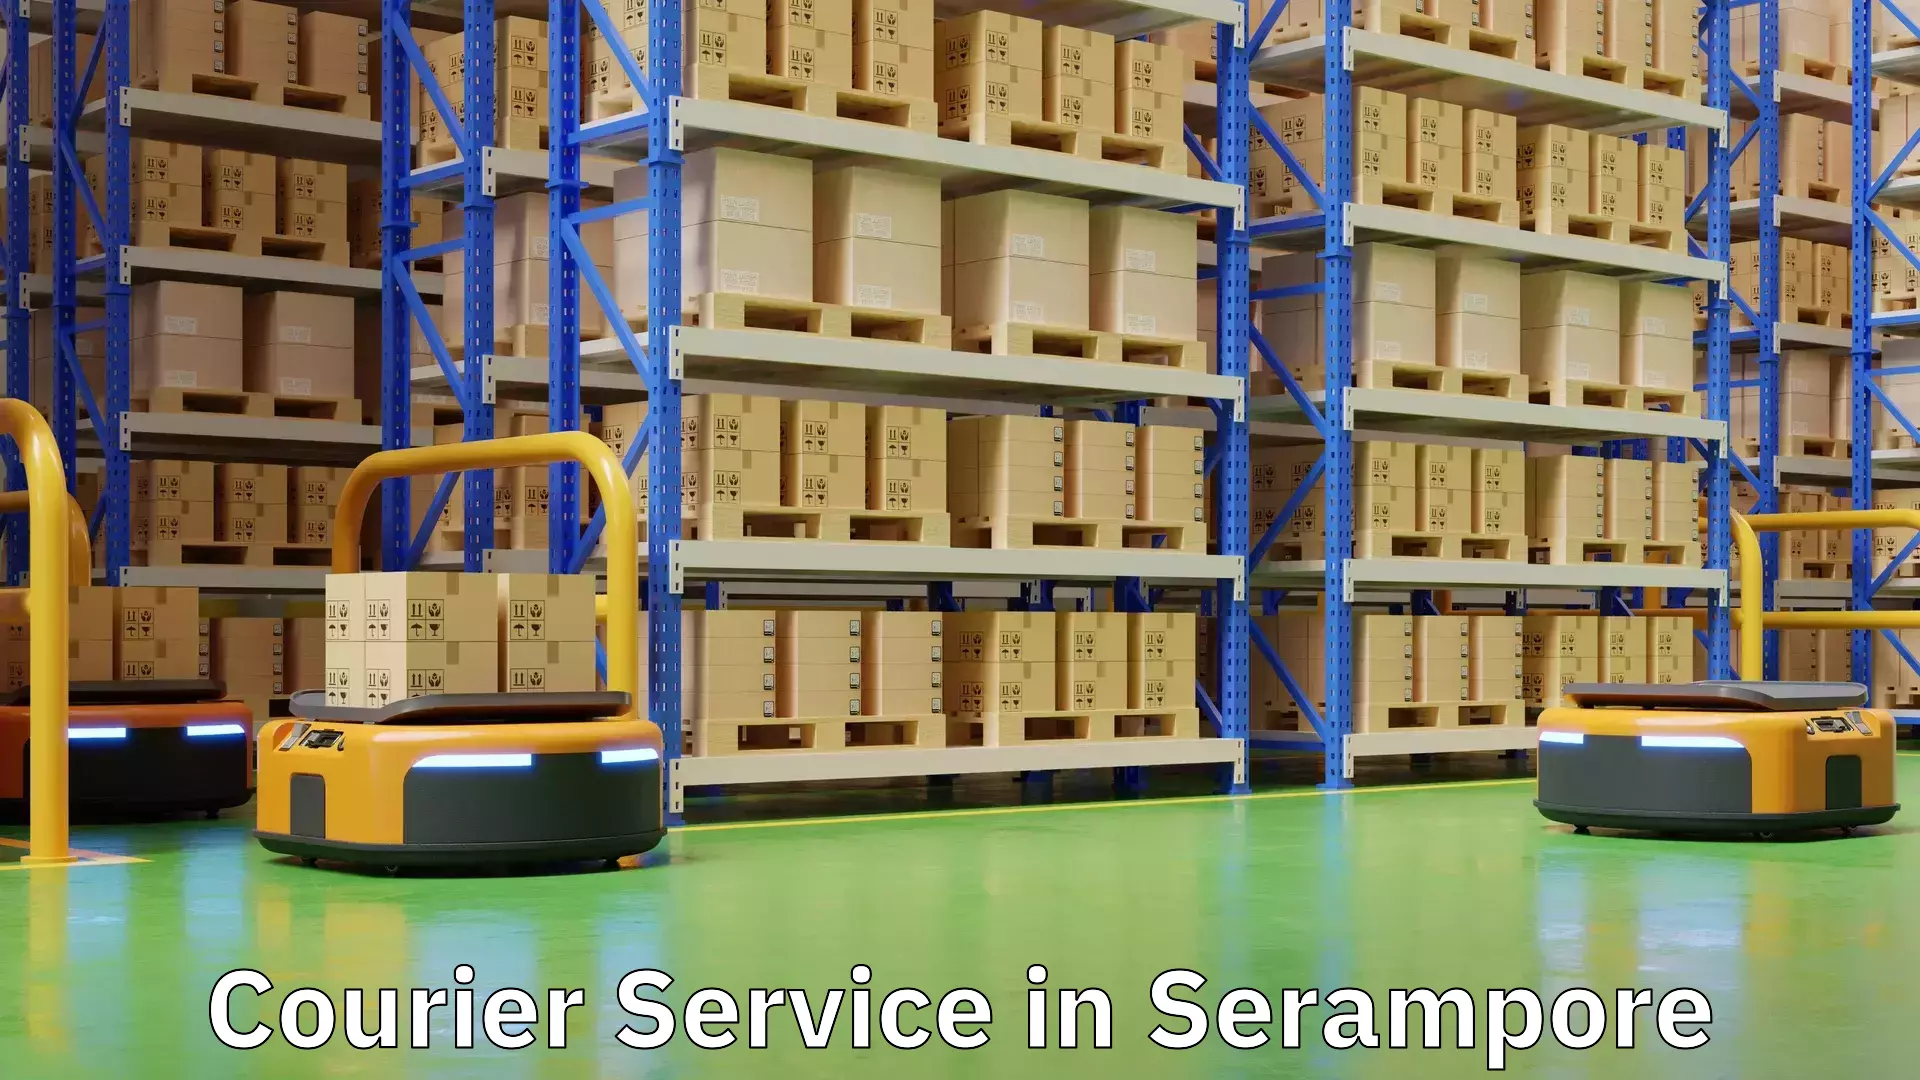 Professional parcel services in Serampore